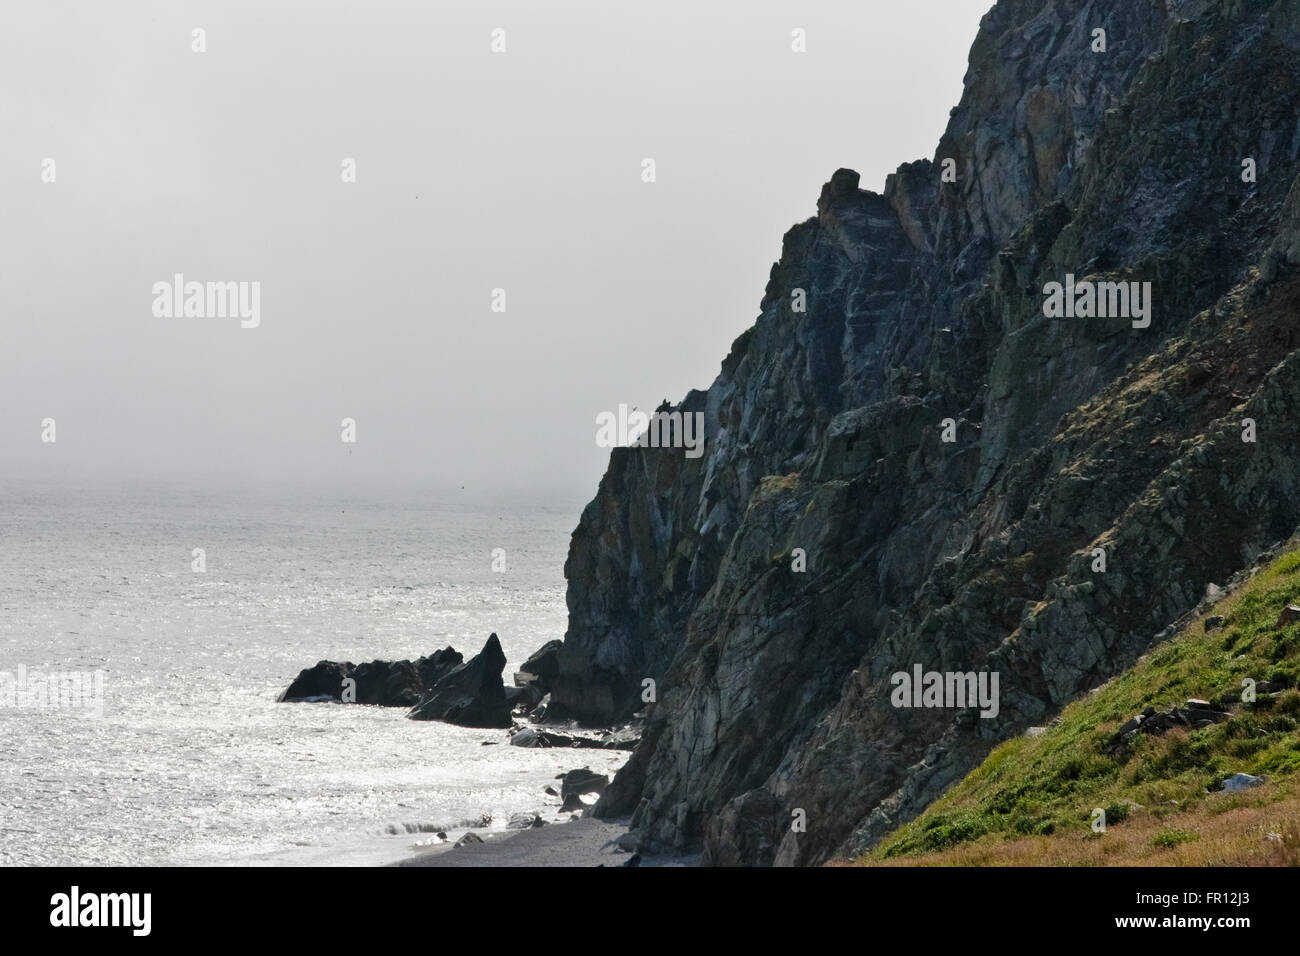 Island, Cape Dezhnev, most eastern corner of Eurasia, Russian Far East Stock Photo